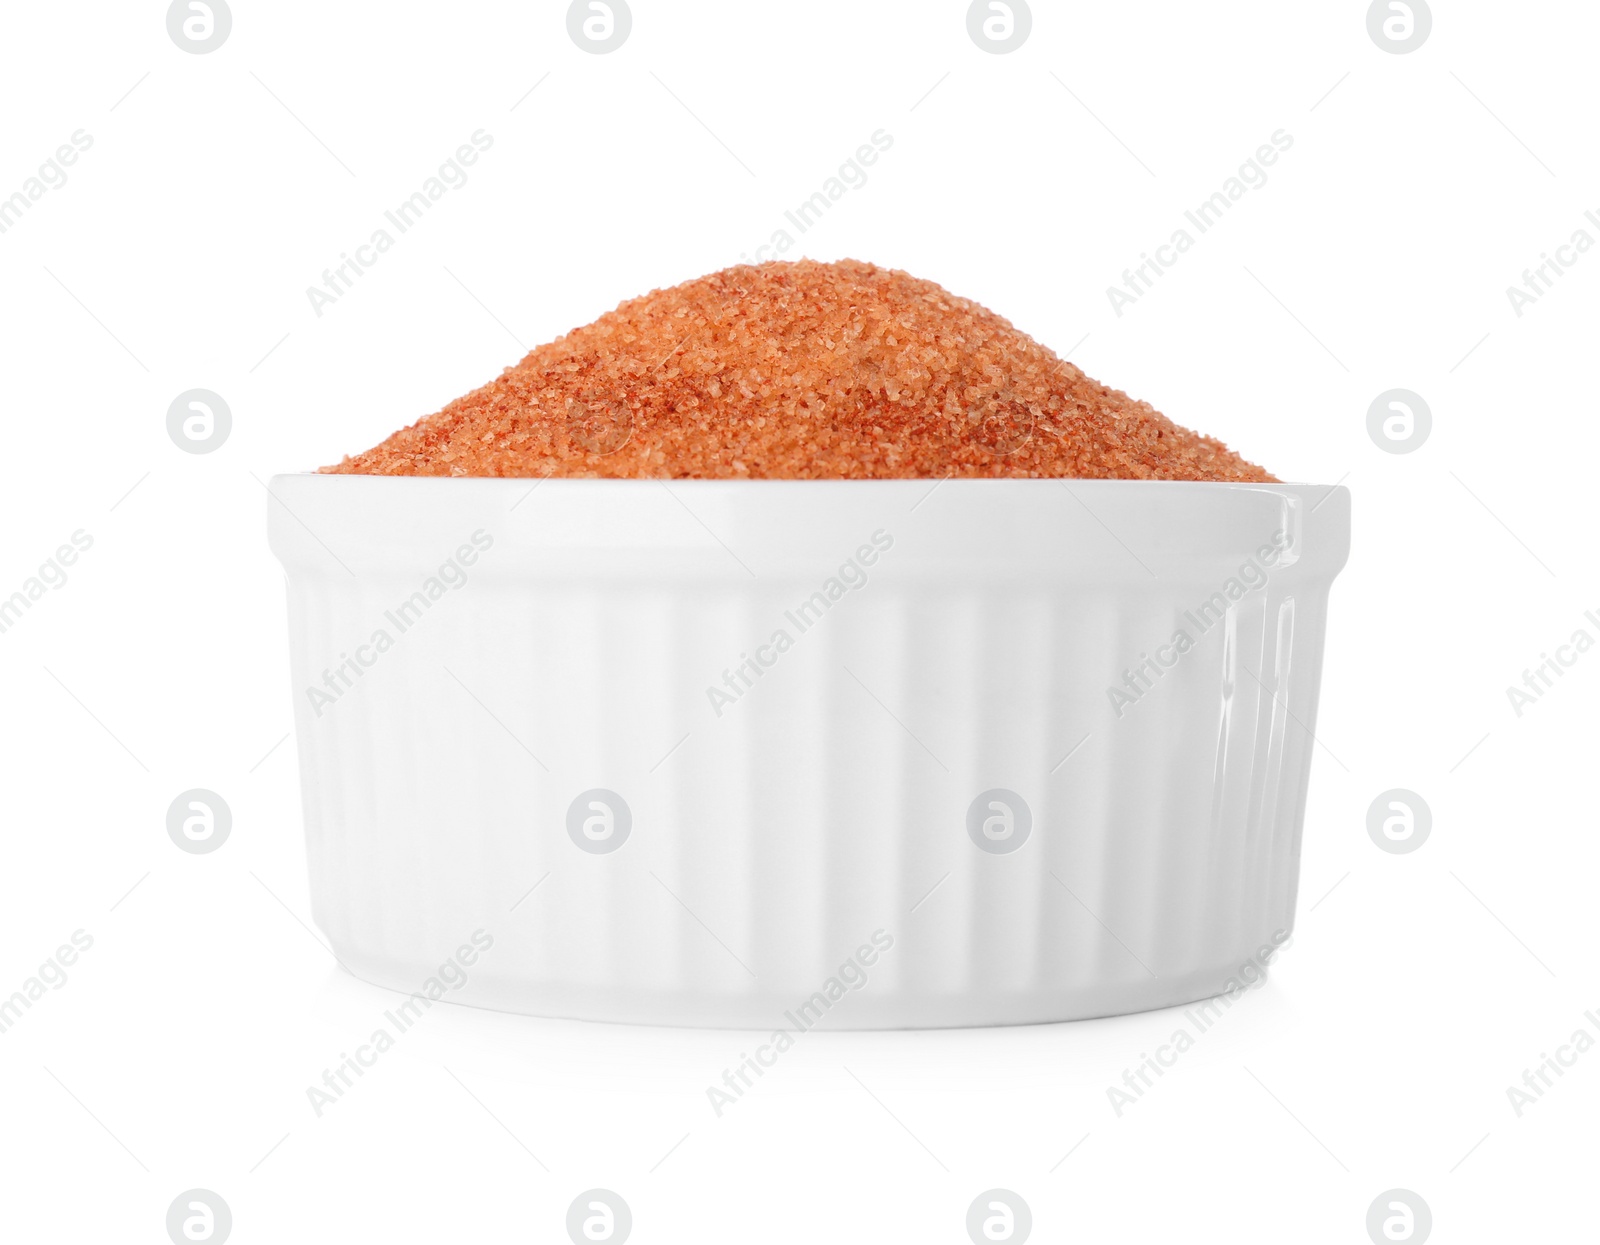 Photo of Orange salt in bowl isolated on white